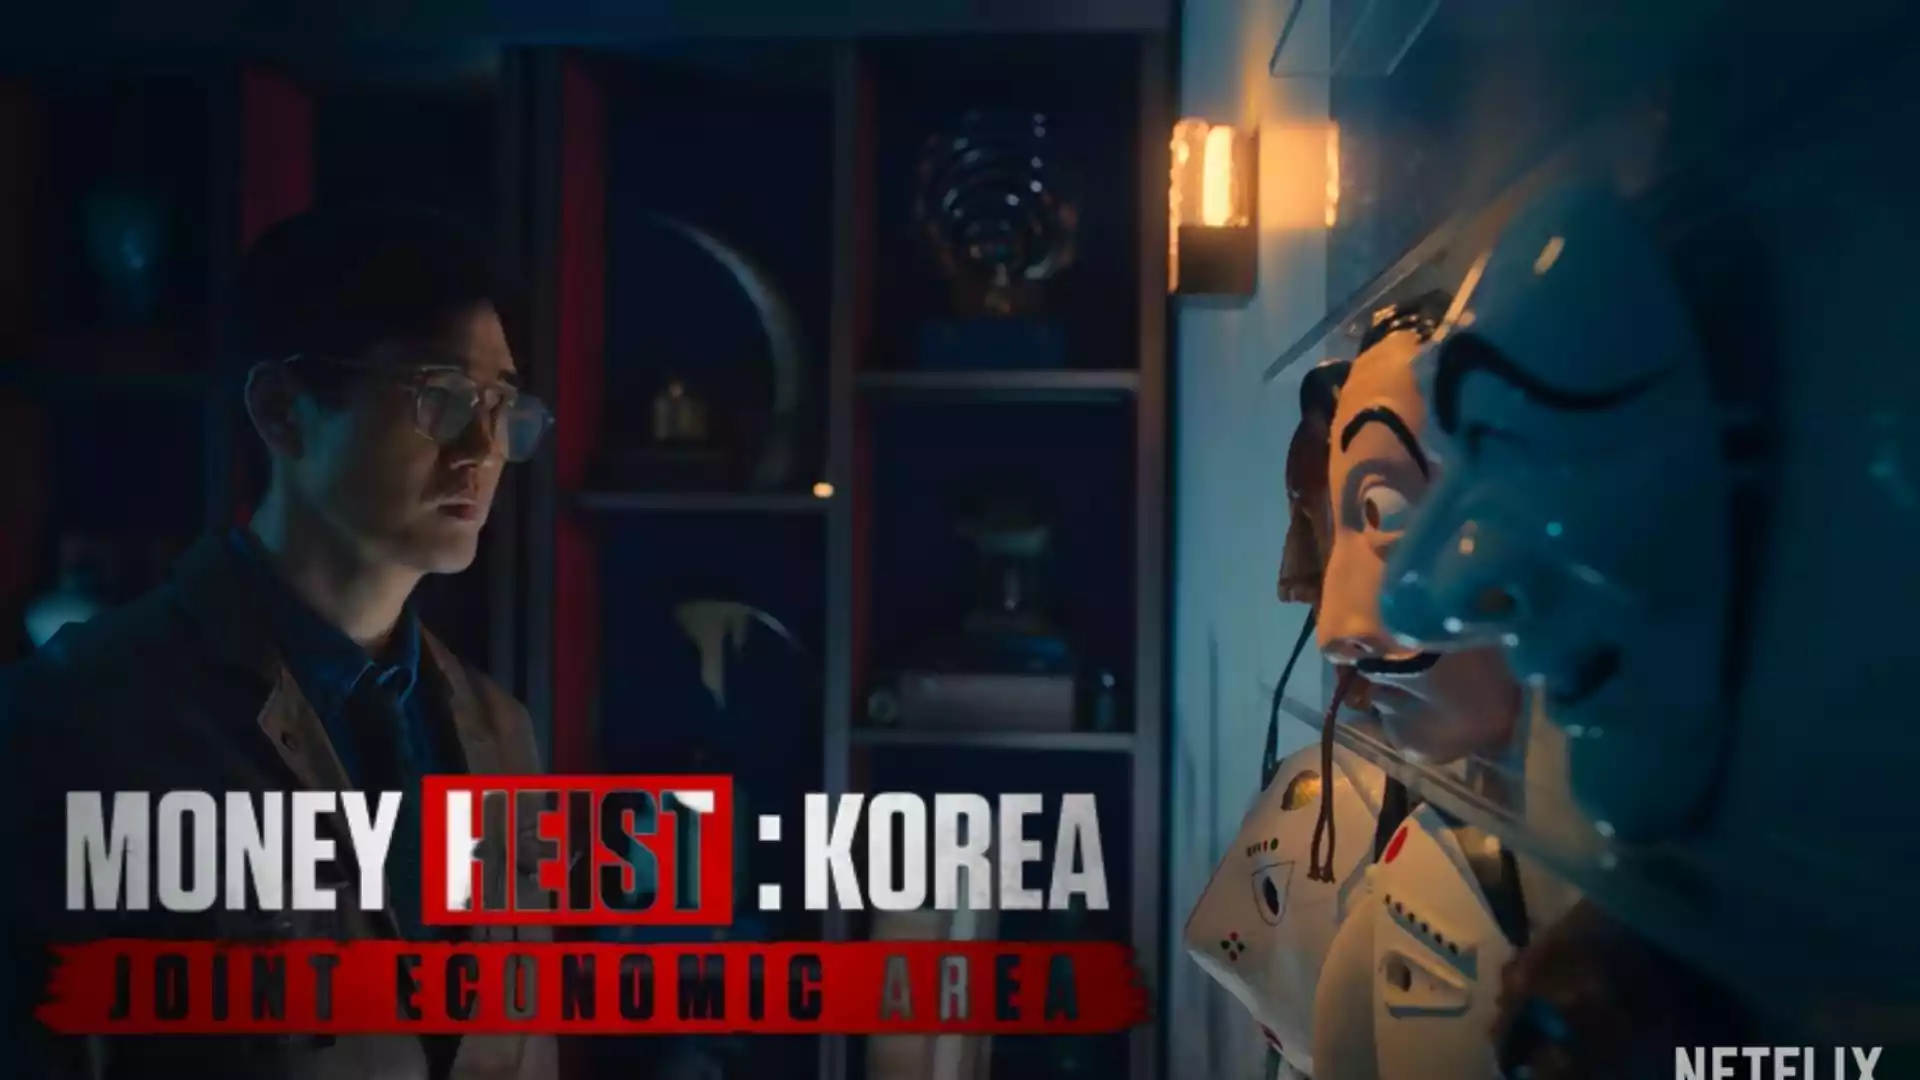 Money Heist Korea Joint Economic Area Parents Guide. Upcoming Netflix series Money Heist: Korea – Joint Economic Area Age rating, release date, overview, trailer